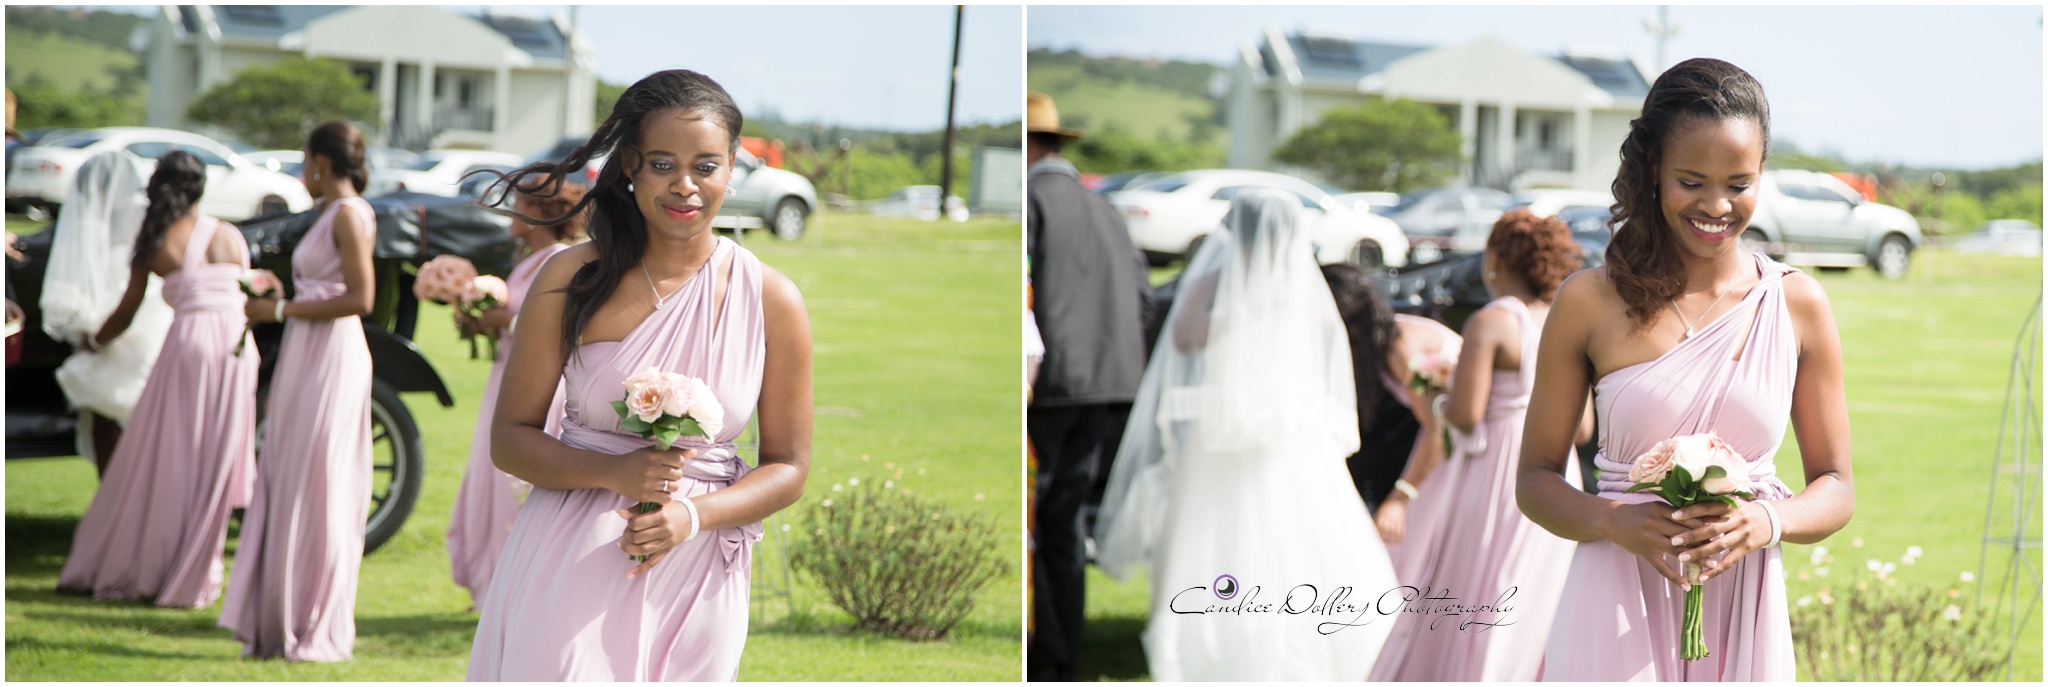 Reuben & Antoinette's Wedding - Candice Dollery Photography_7856